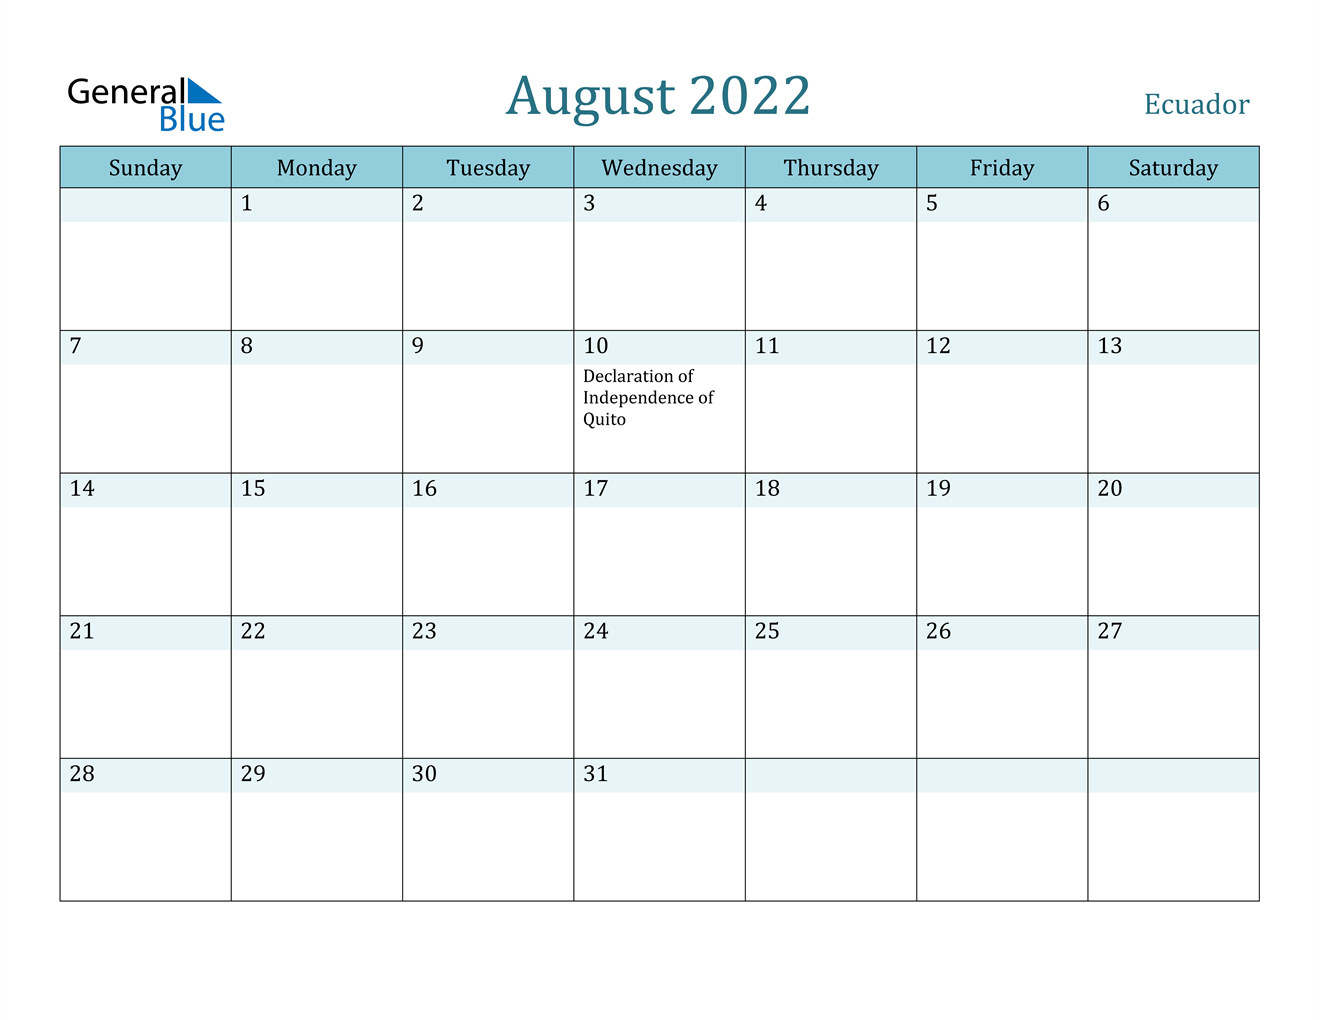 August 2022 Calendar - Ecuador